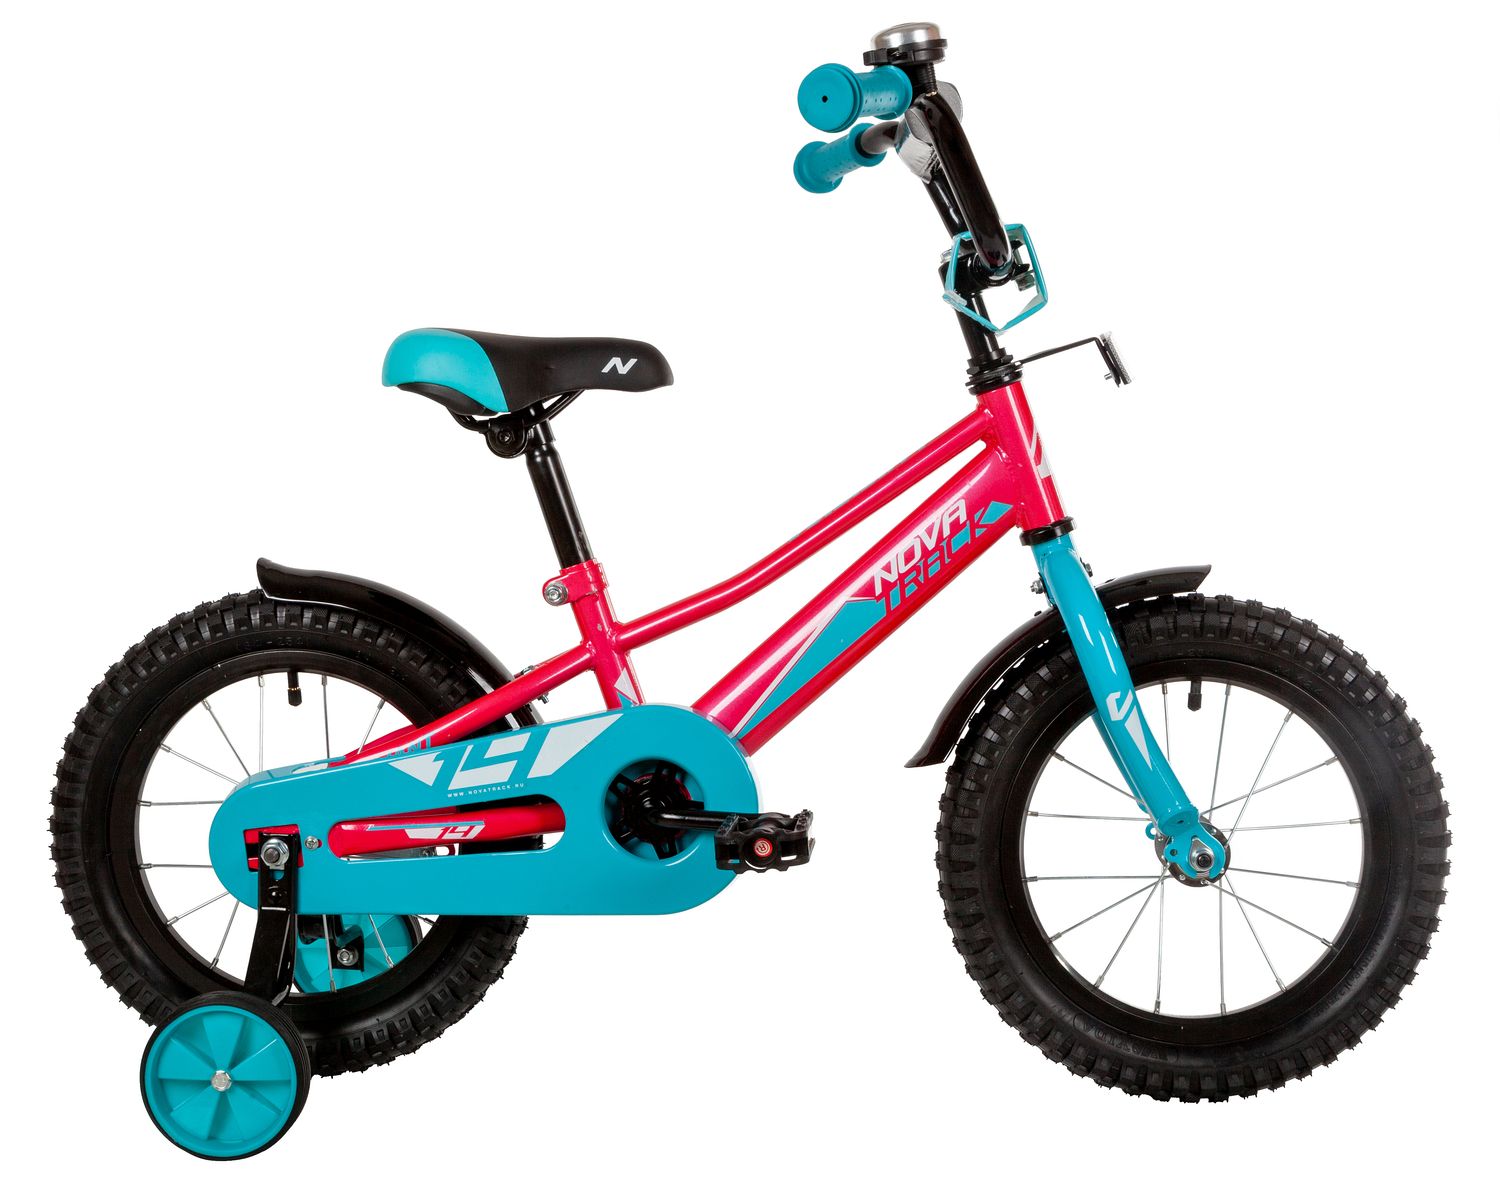  Велосипед детский Novatrack Valiant 14 2019